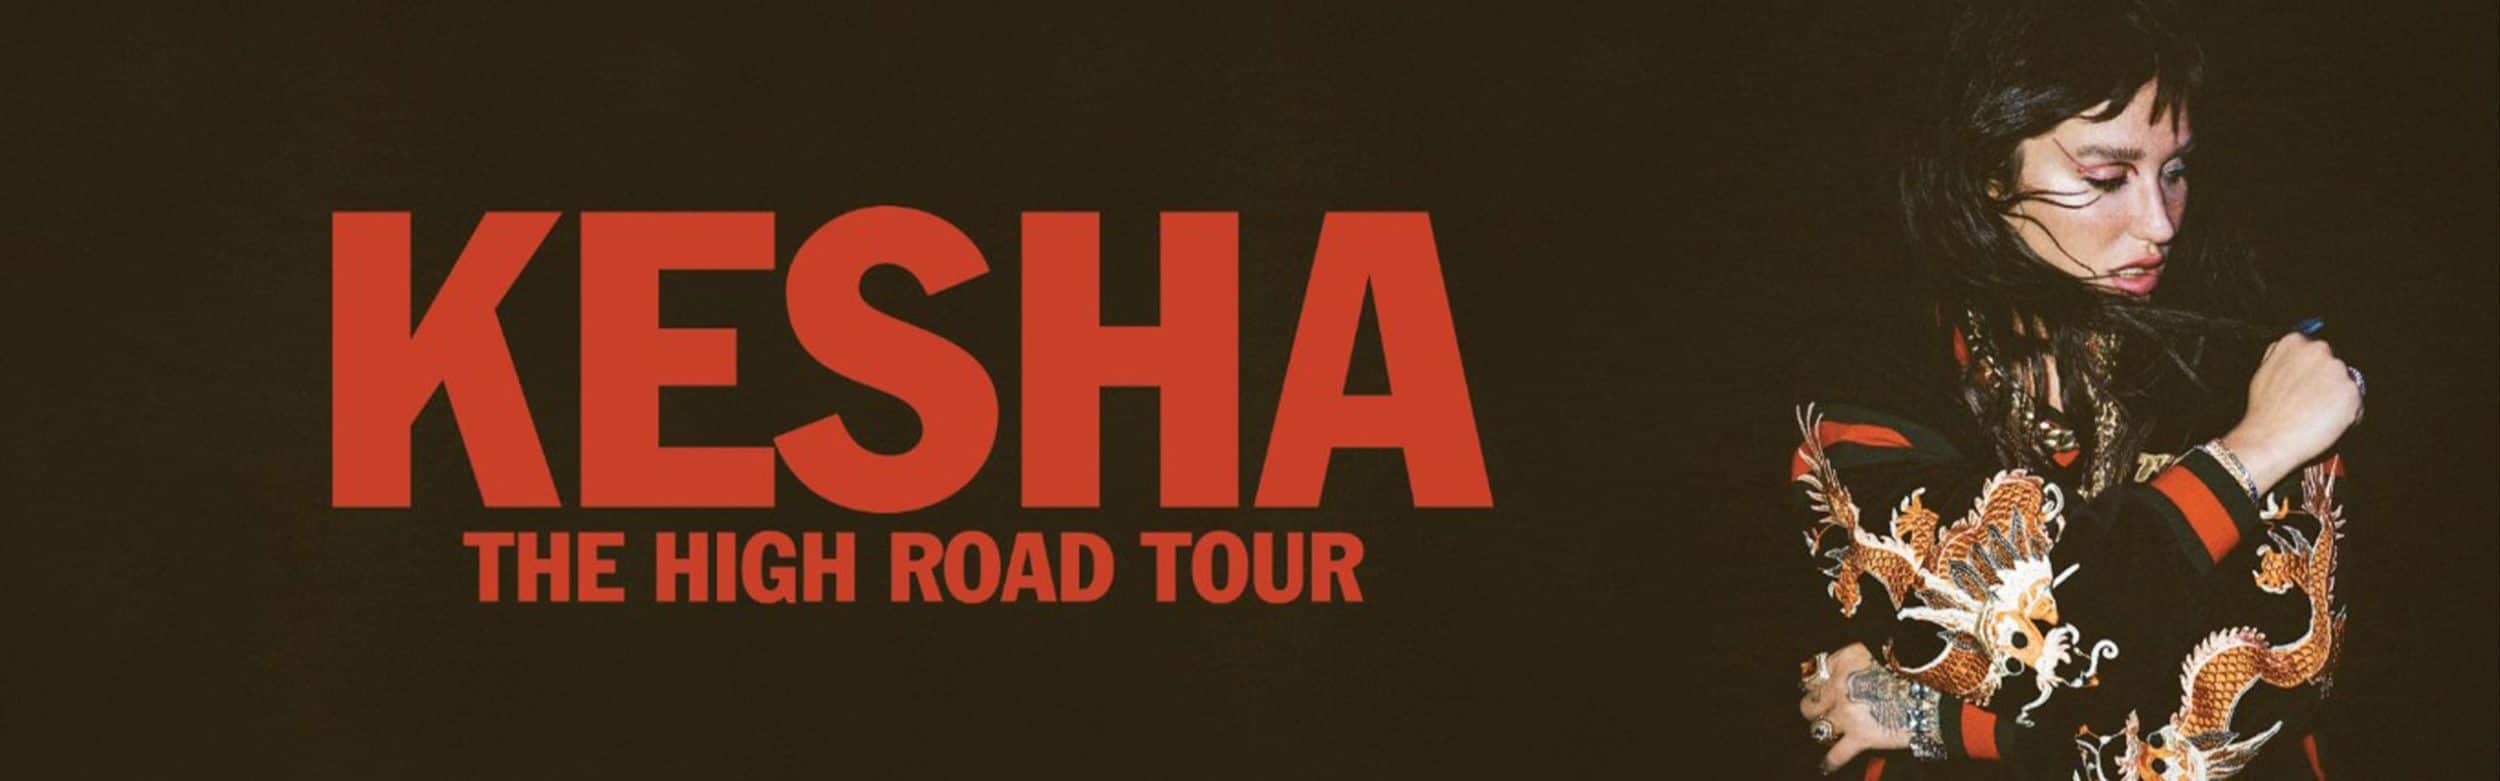 Kesha - The High Road Tour poster